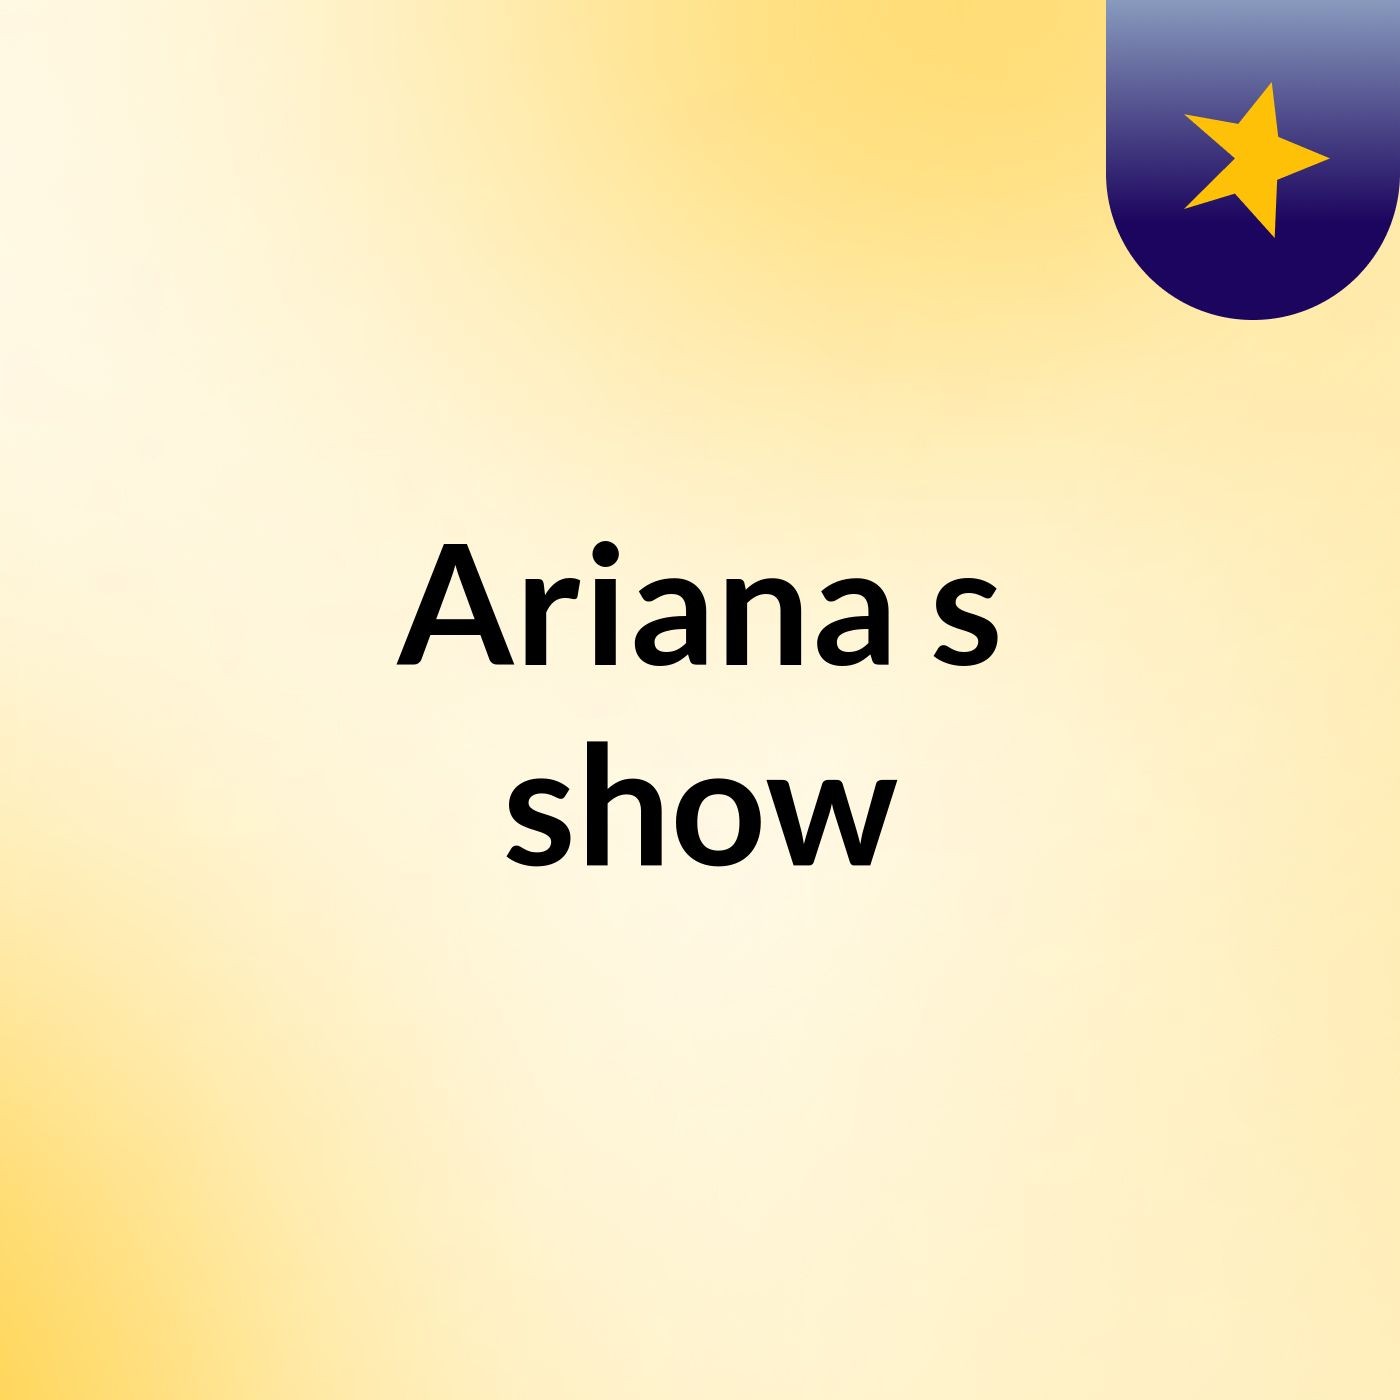 Ariana's show